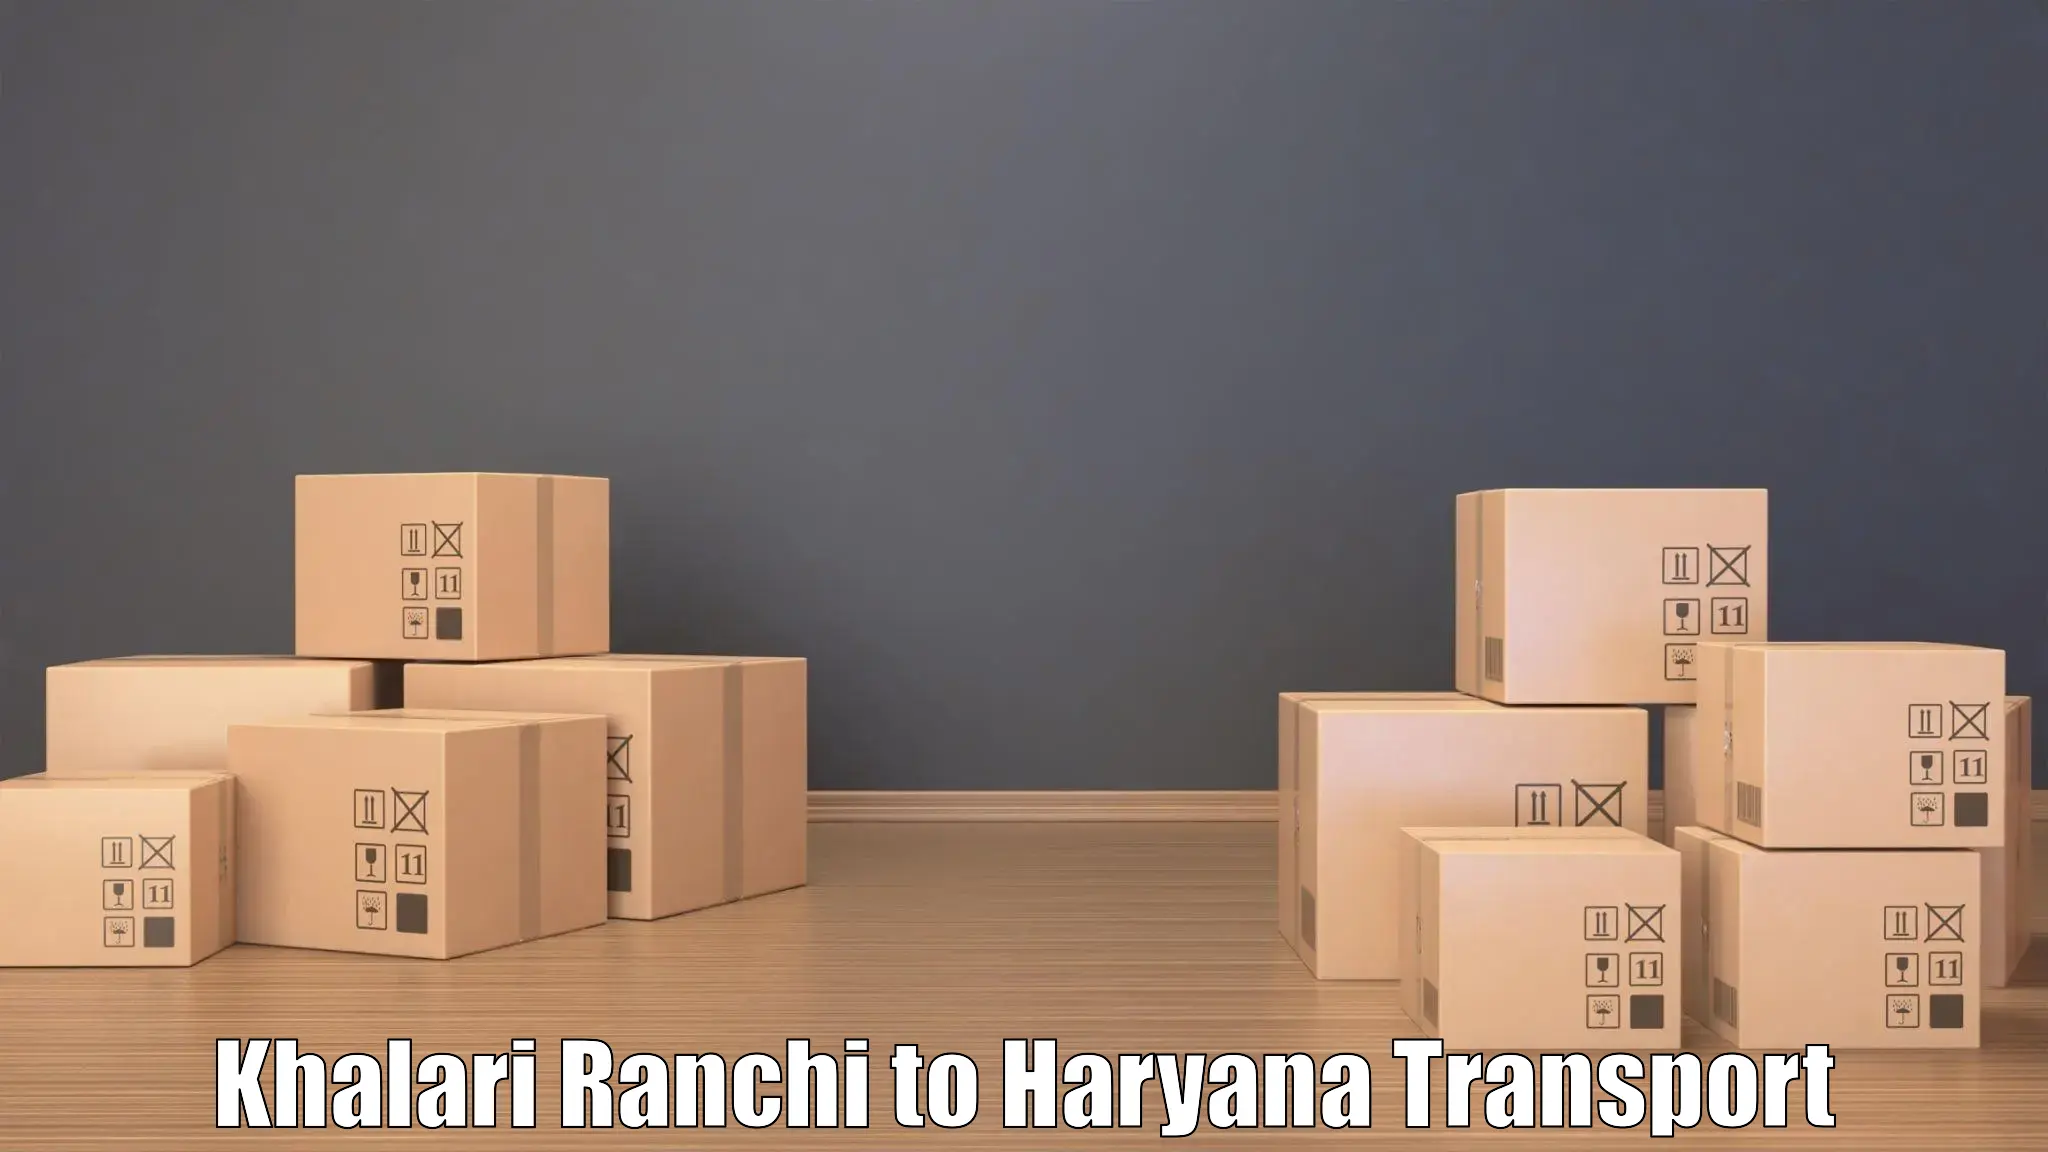 Truck transport companies in India in Khalari Ranchi to Sonipat